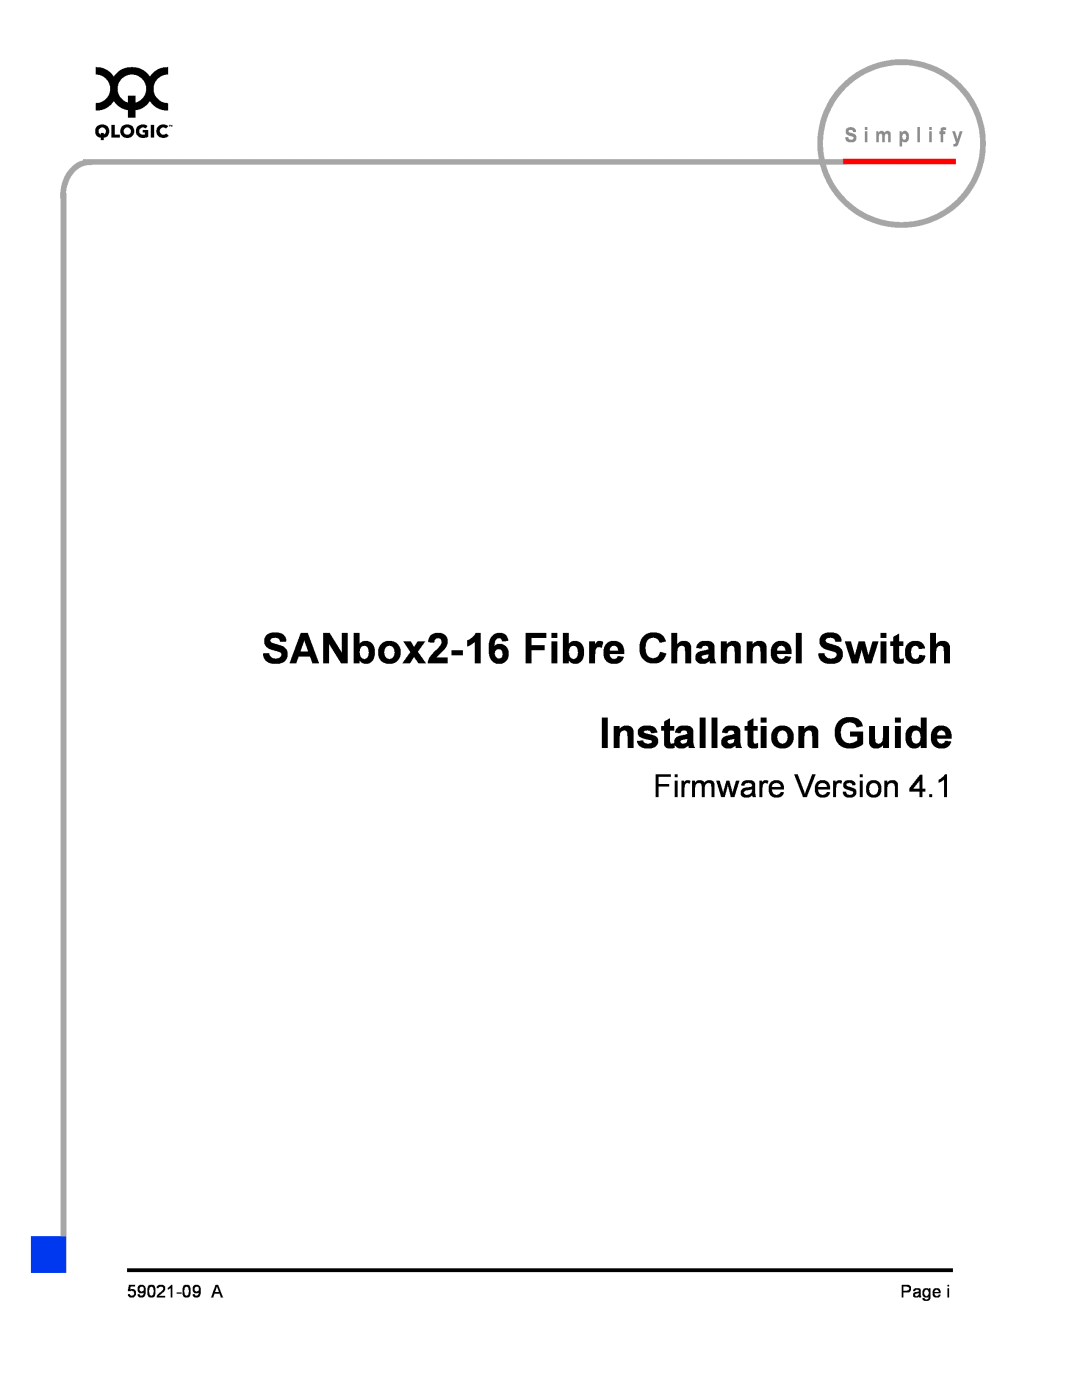 Q-Logic SB2A-16B, QLA2342 manual Firmware Version, SANbox2-16 Fibre Channel Switch Installation Guide, S i m p l i f y 